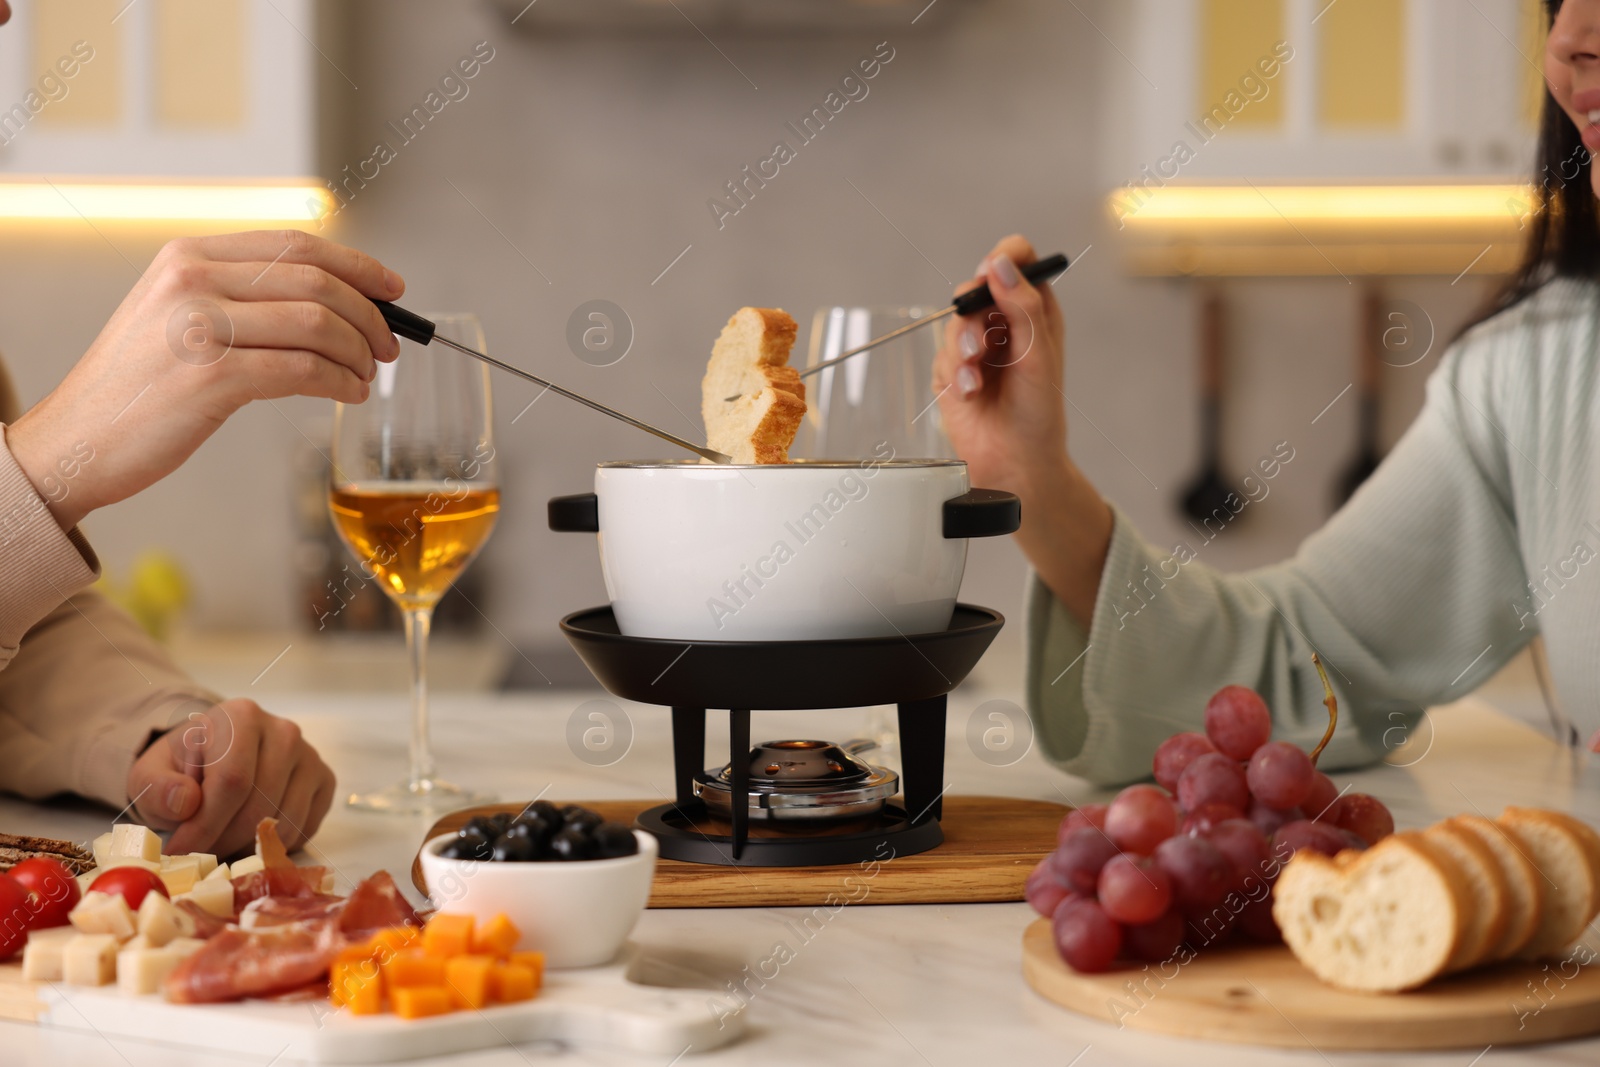 Photo of Couple enjoying fondue during romantic date in kitchen, closeup